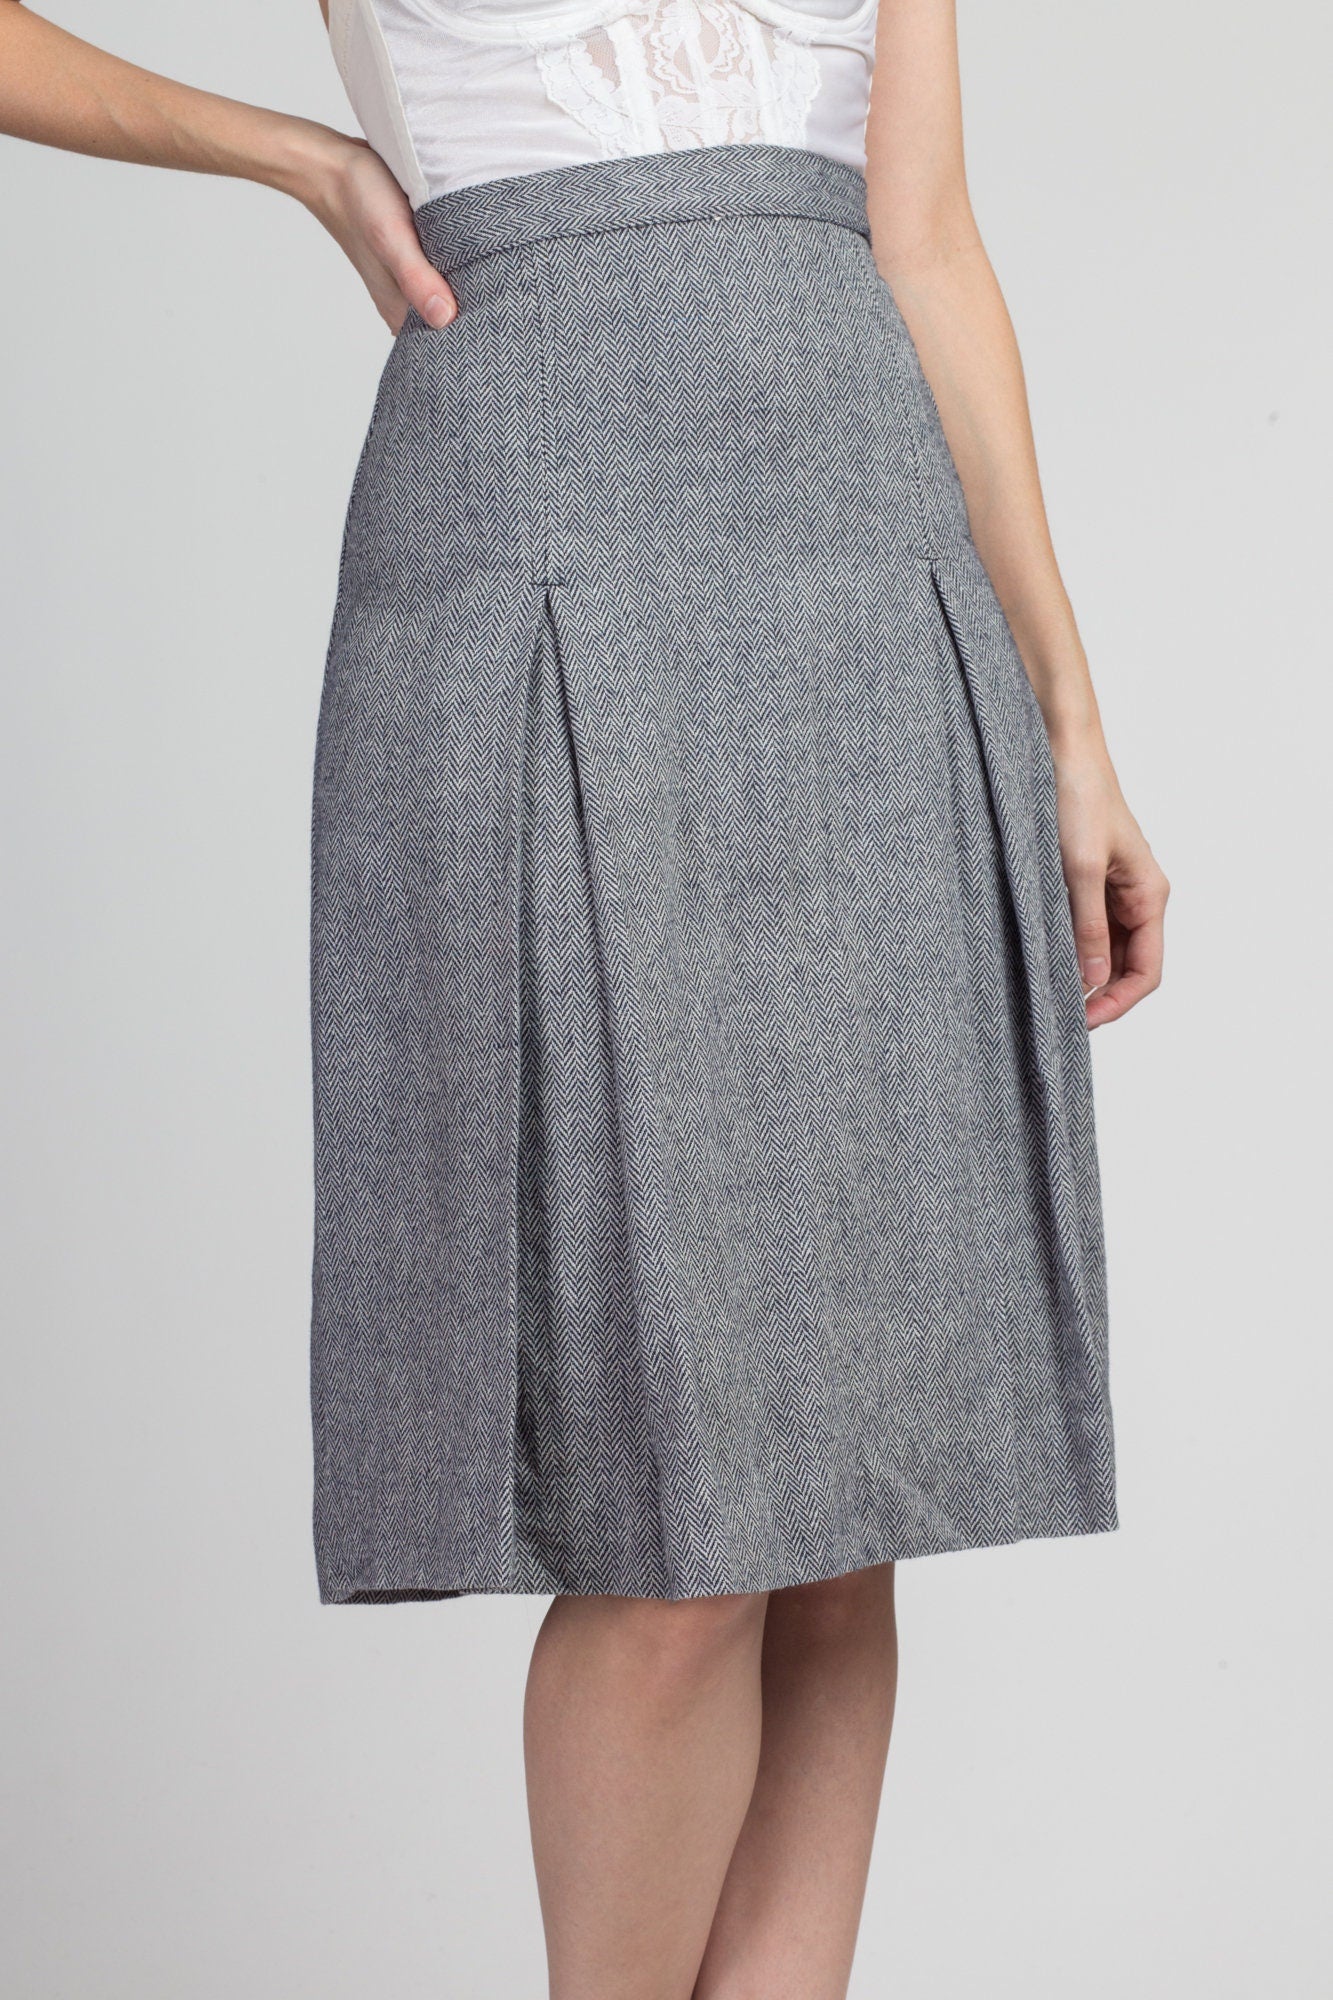 70s Herringbone Pleated Wool Skirt - Extra Small, 24